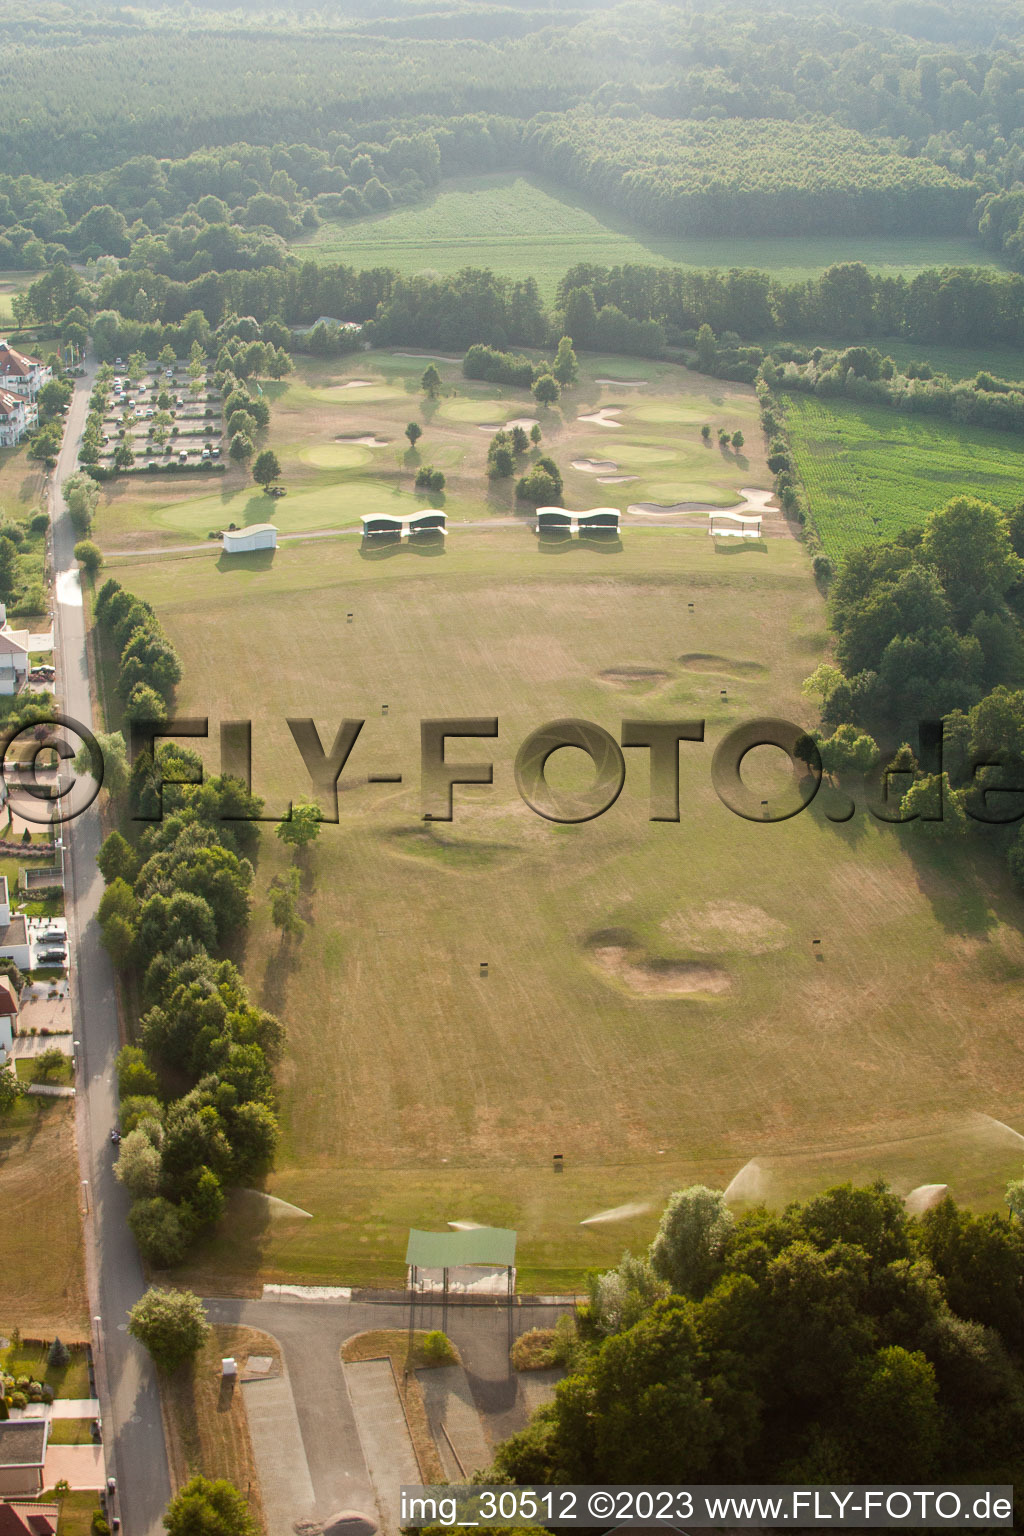 Bird's eye view of Golf club Soufflenheim Baden-Baden in Soufflenheim in the state Bas-Rhin, France